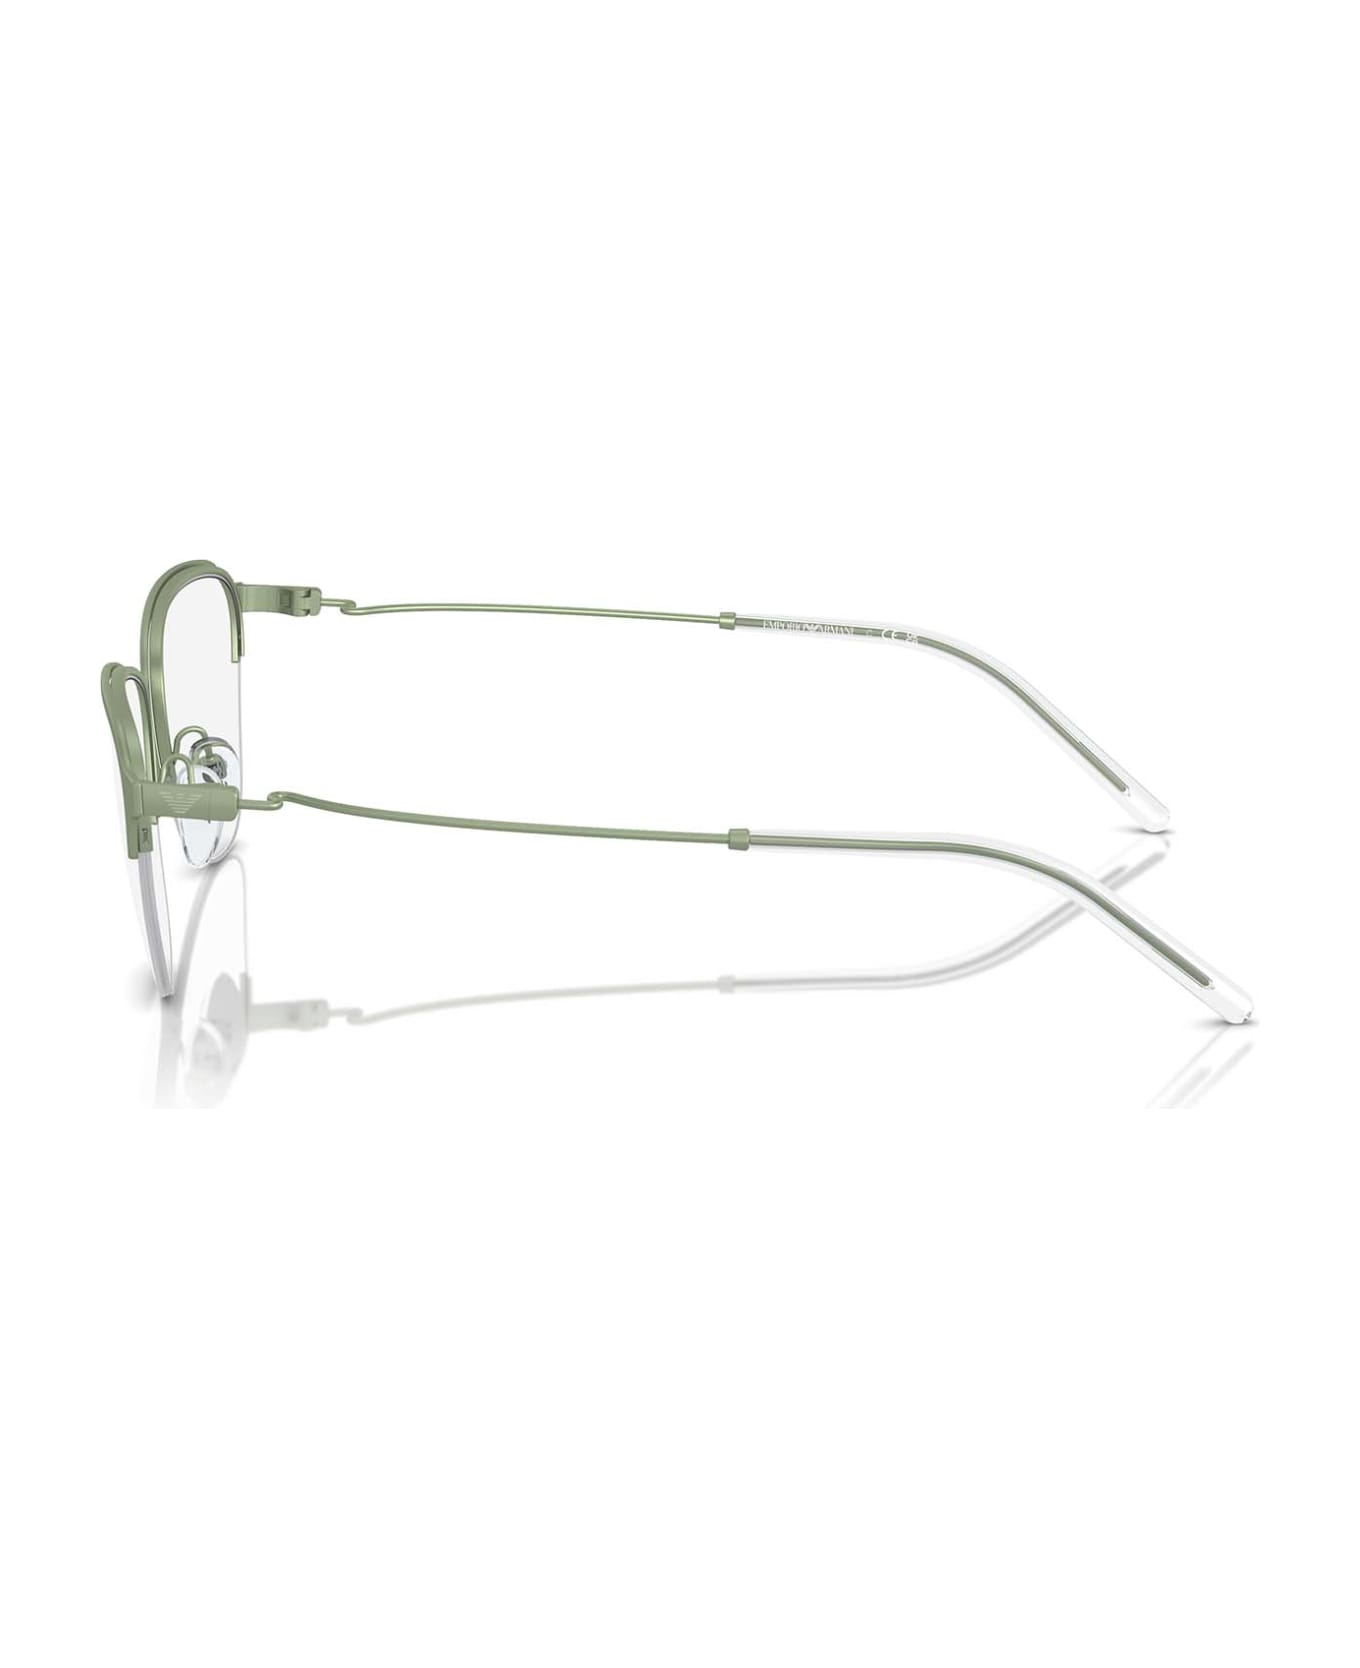 Emporio Armani Ea1161 Metal Green Glasses - Metal Green